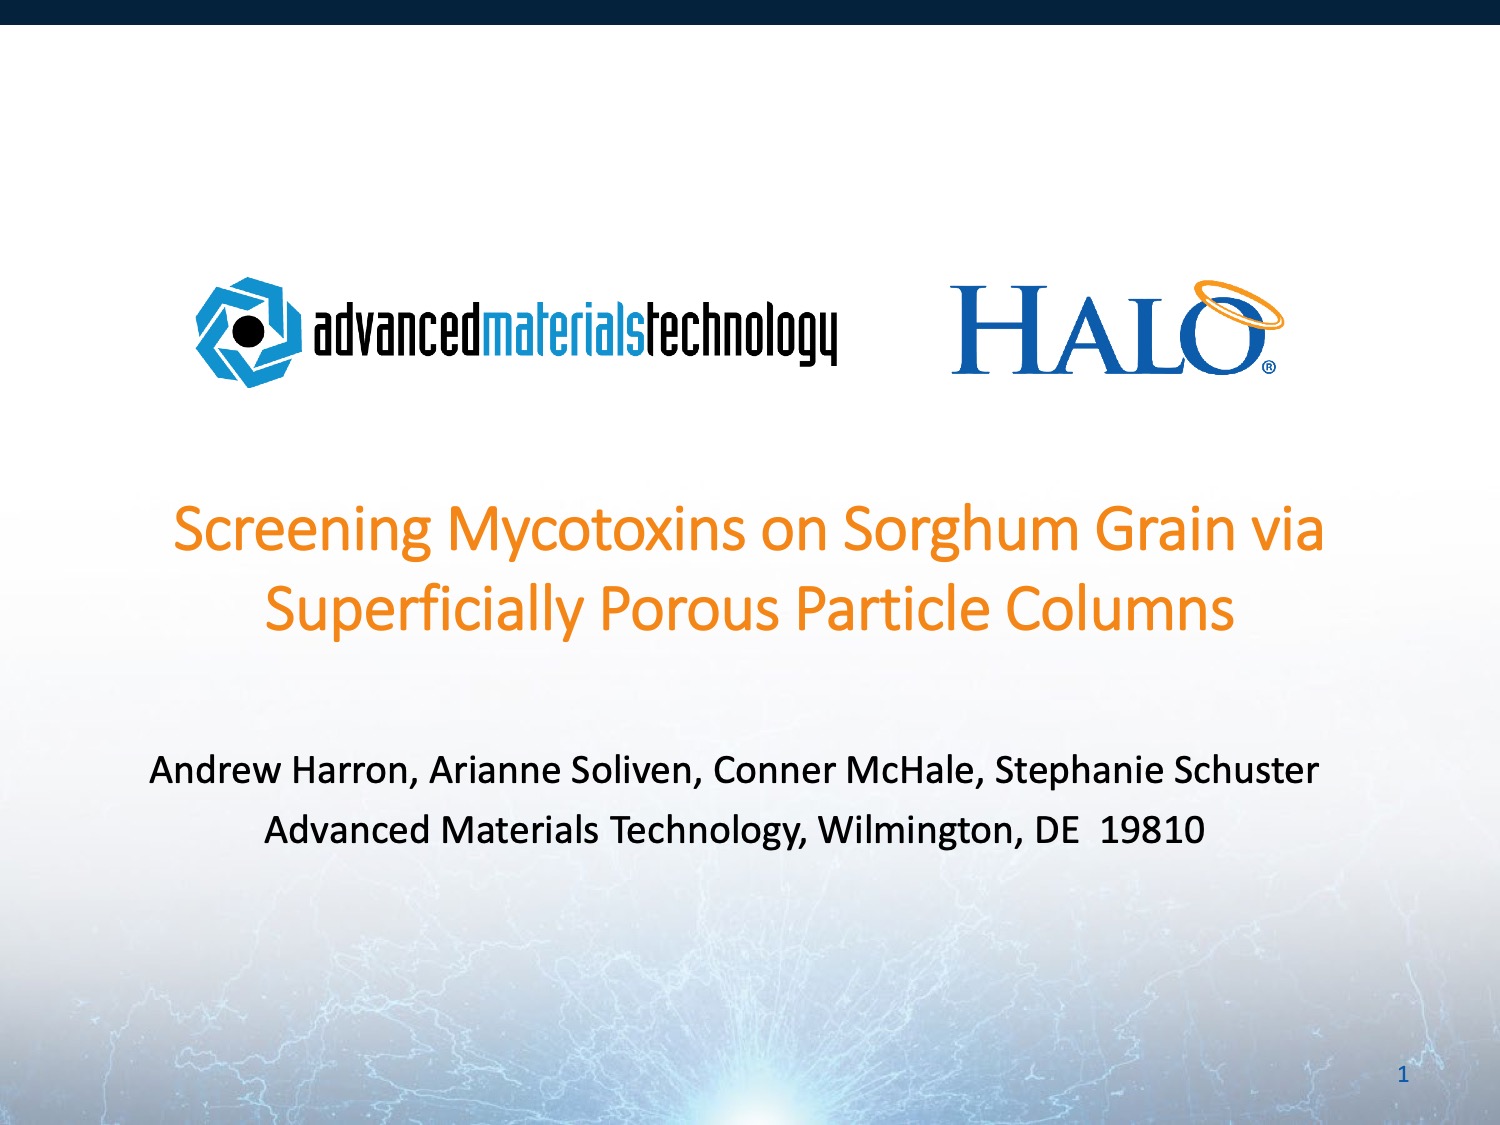 conference paper - screening mycotoxins on sorghum grain via spp columns